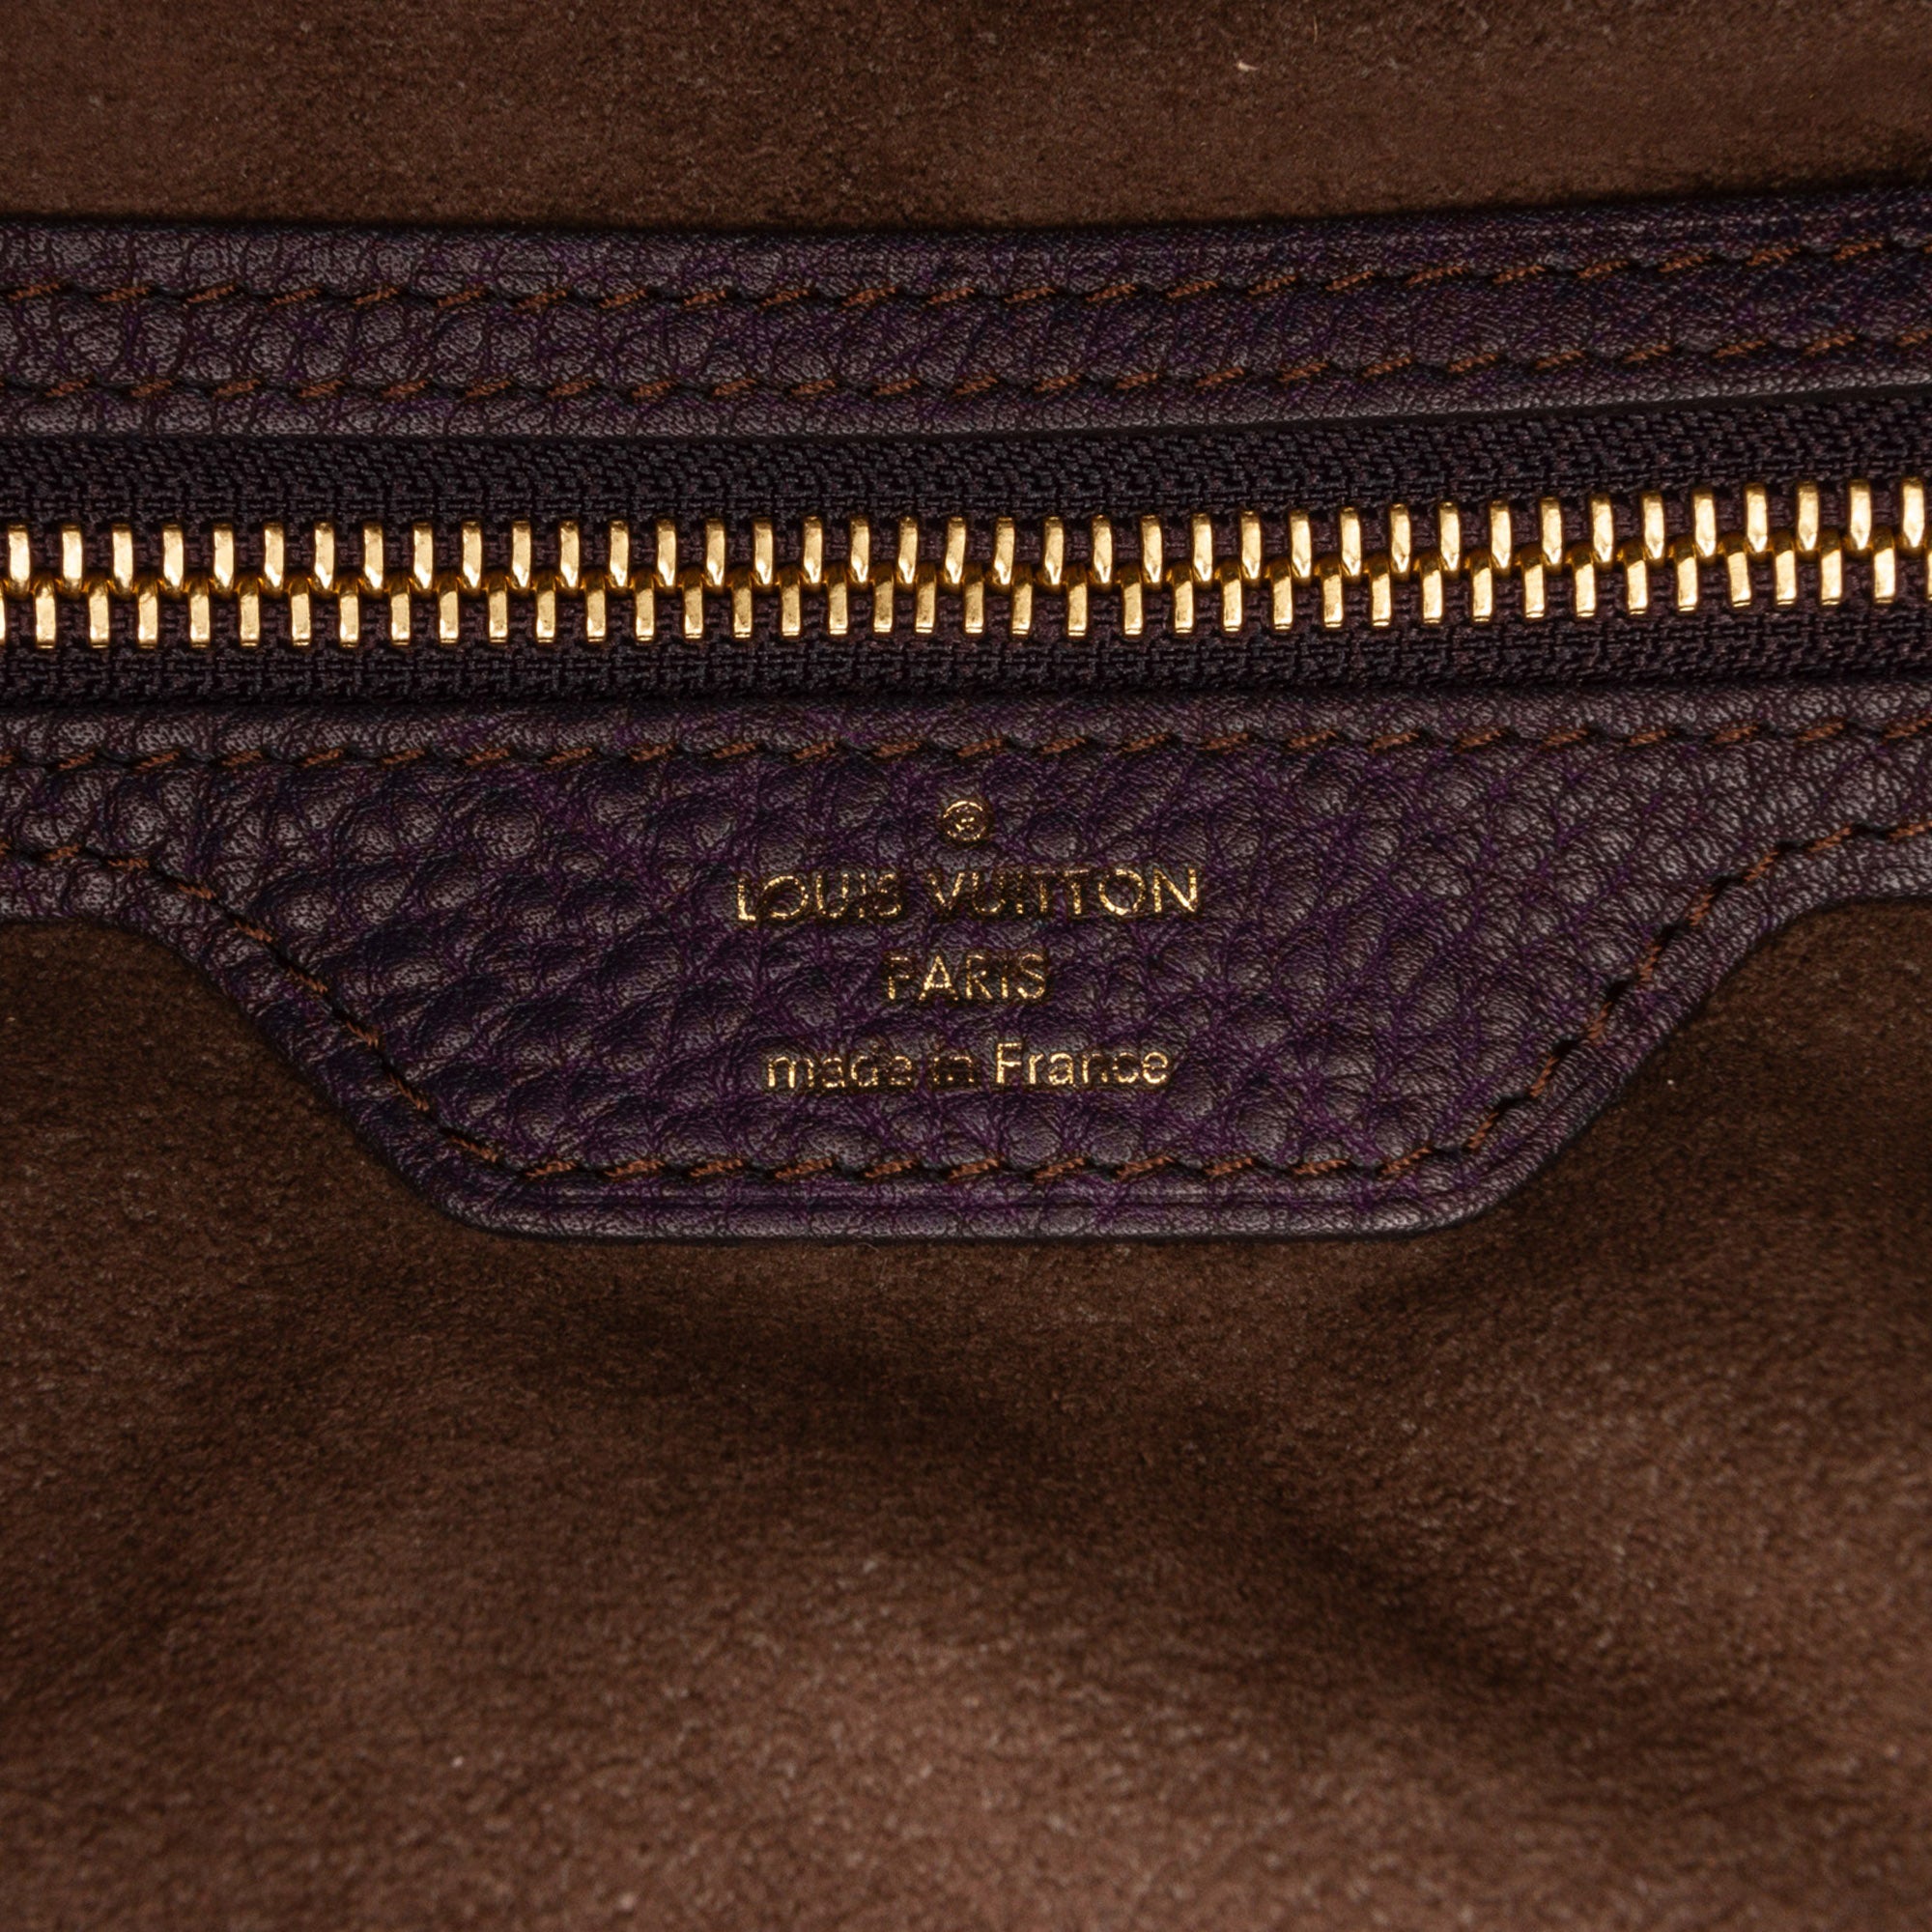 LOUIS VUITTON Monogram Mahina Stellar PM 2Way Handbag Deep Purple AR4131  used